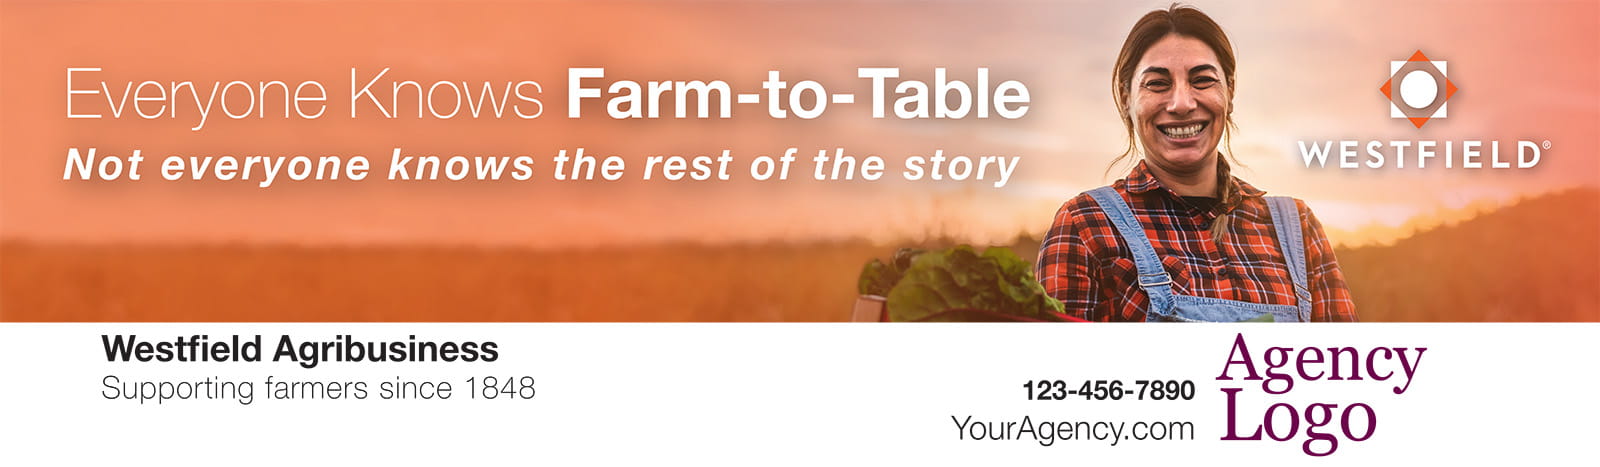 Farm to Table 1600x467_OutdoorBillboard